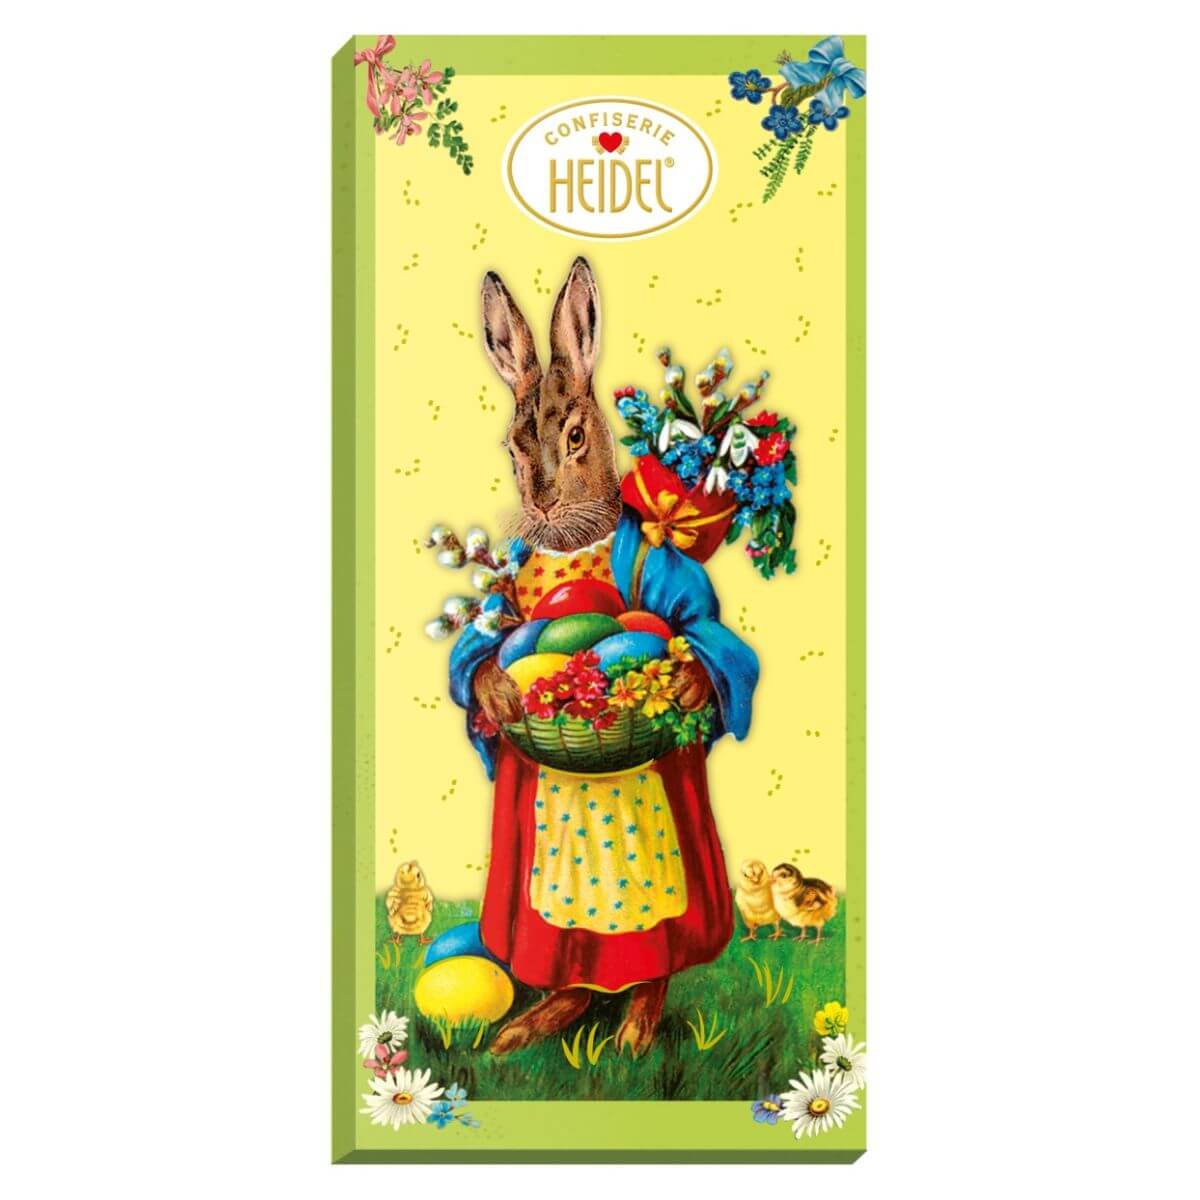 Heidel Easter Nostalgia Girl Bunny Milk Chocolate Bar 100g